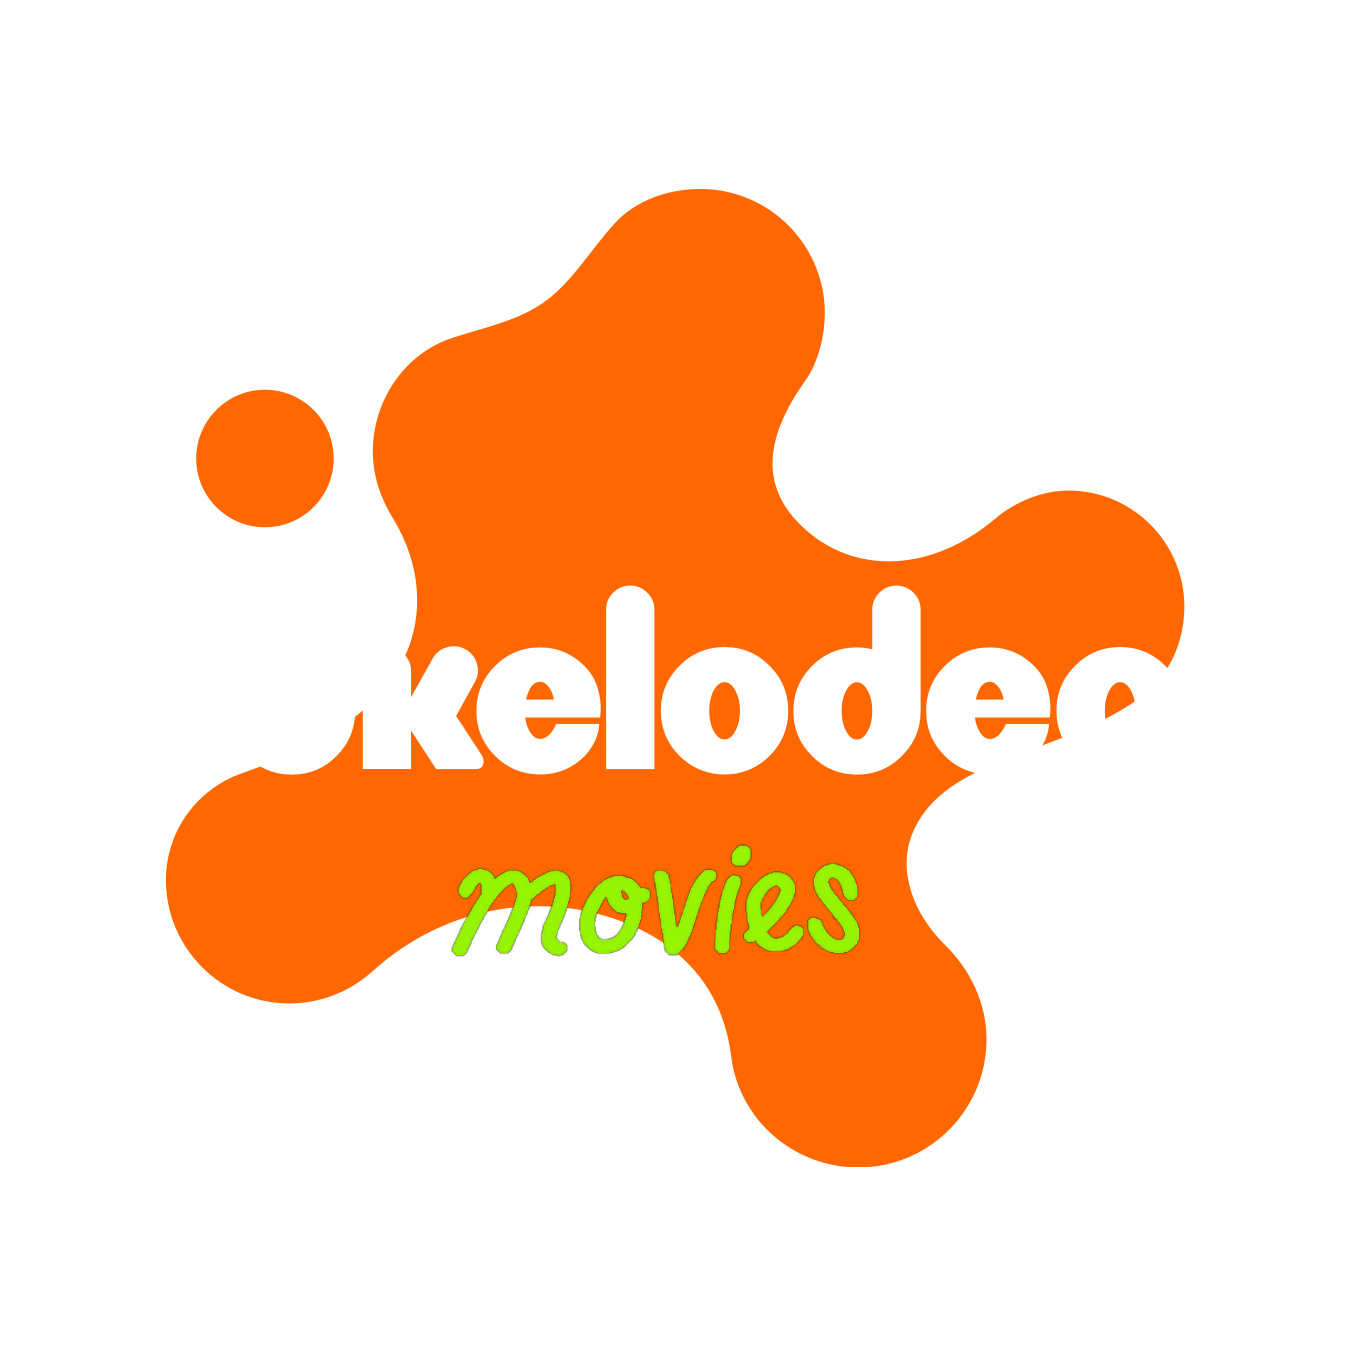 Nickelodeon Movies logo 2023 update, concept. by aliensasquatch on